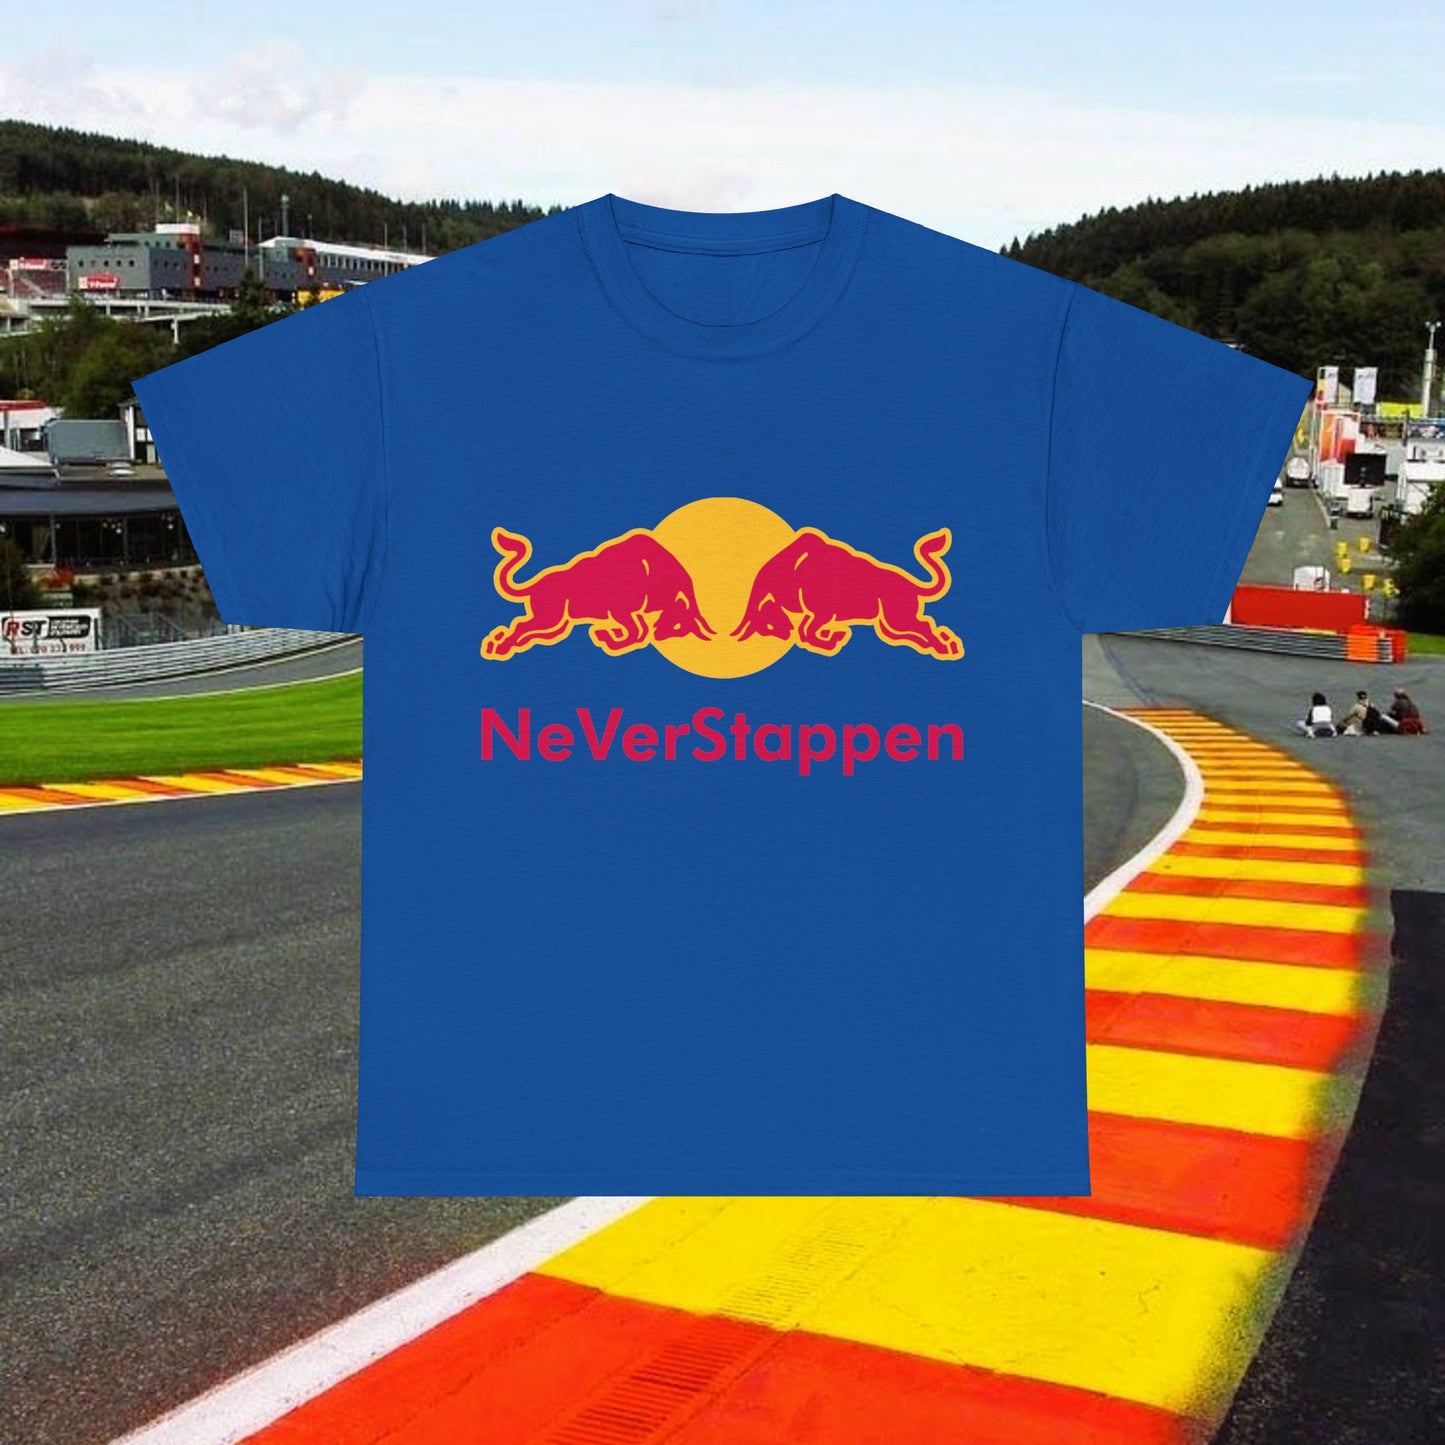 Max Verstappen Shirt Verstappen T-shirt Red Bull T shirt F1 tshirt Formula 1 tee F1 Gift Formula 1 Gift Red Bull Fan Gift Funny Racing Shirt Next Cult Brand F1, Max Verstappen, Red Bull